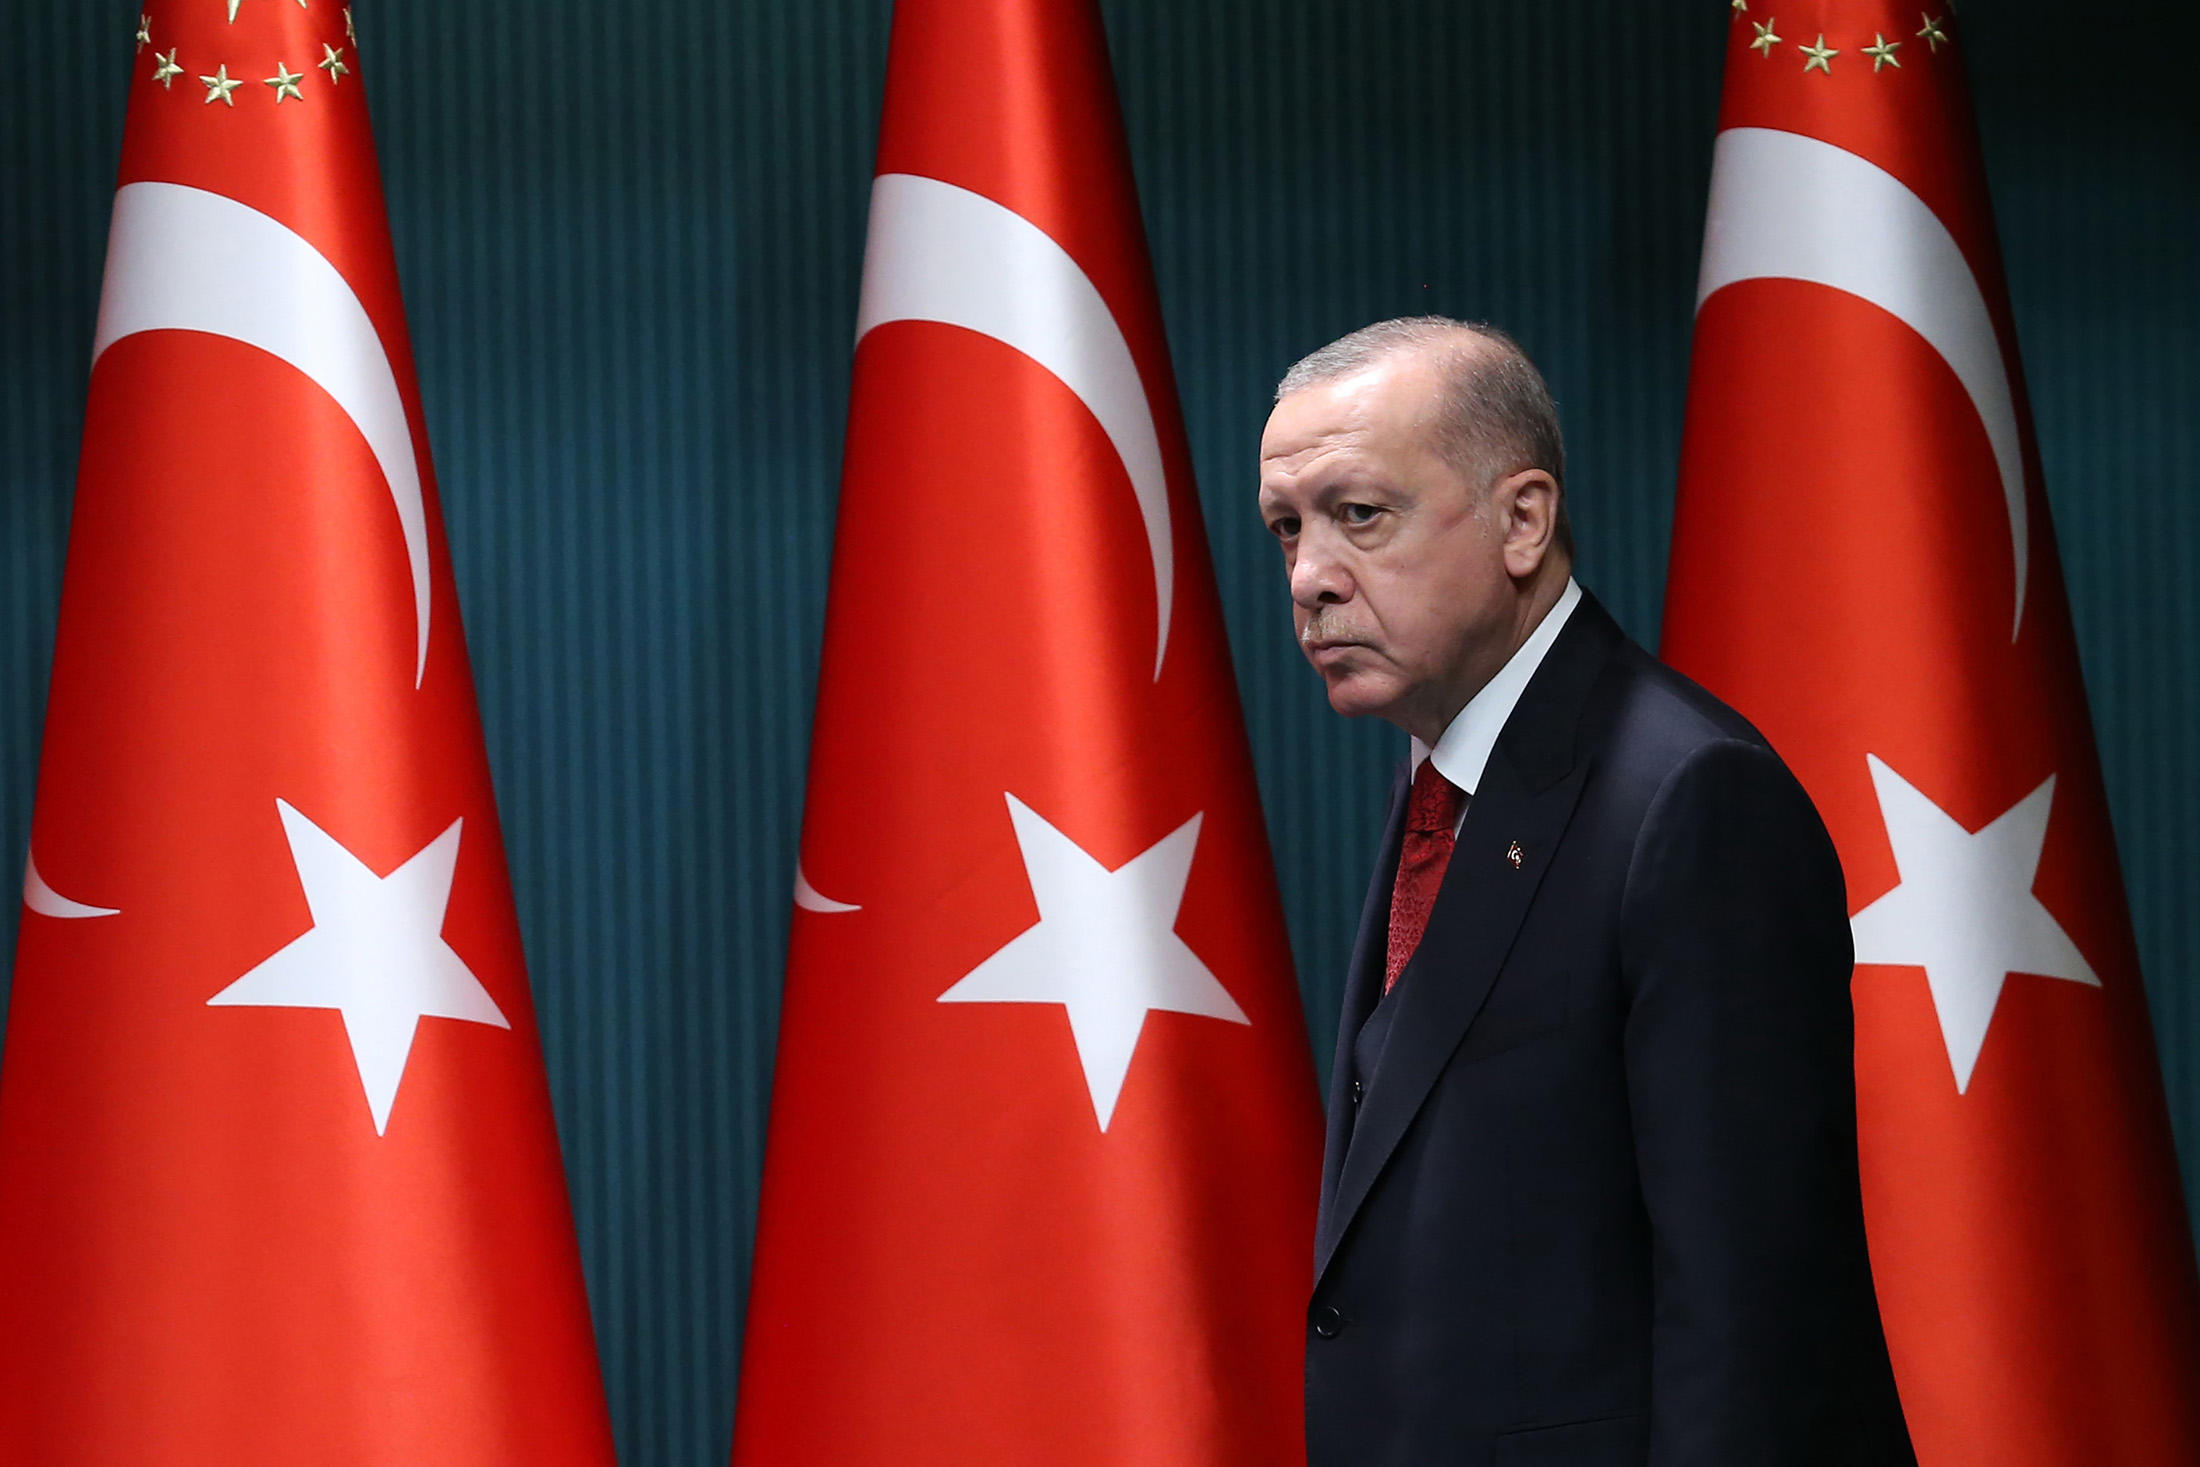 Erdoğan sets stage for higher inflation, lower growth in Turkey